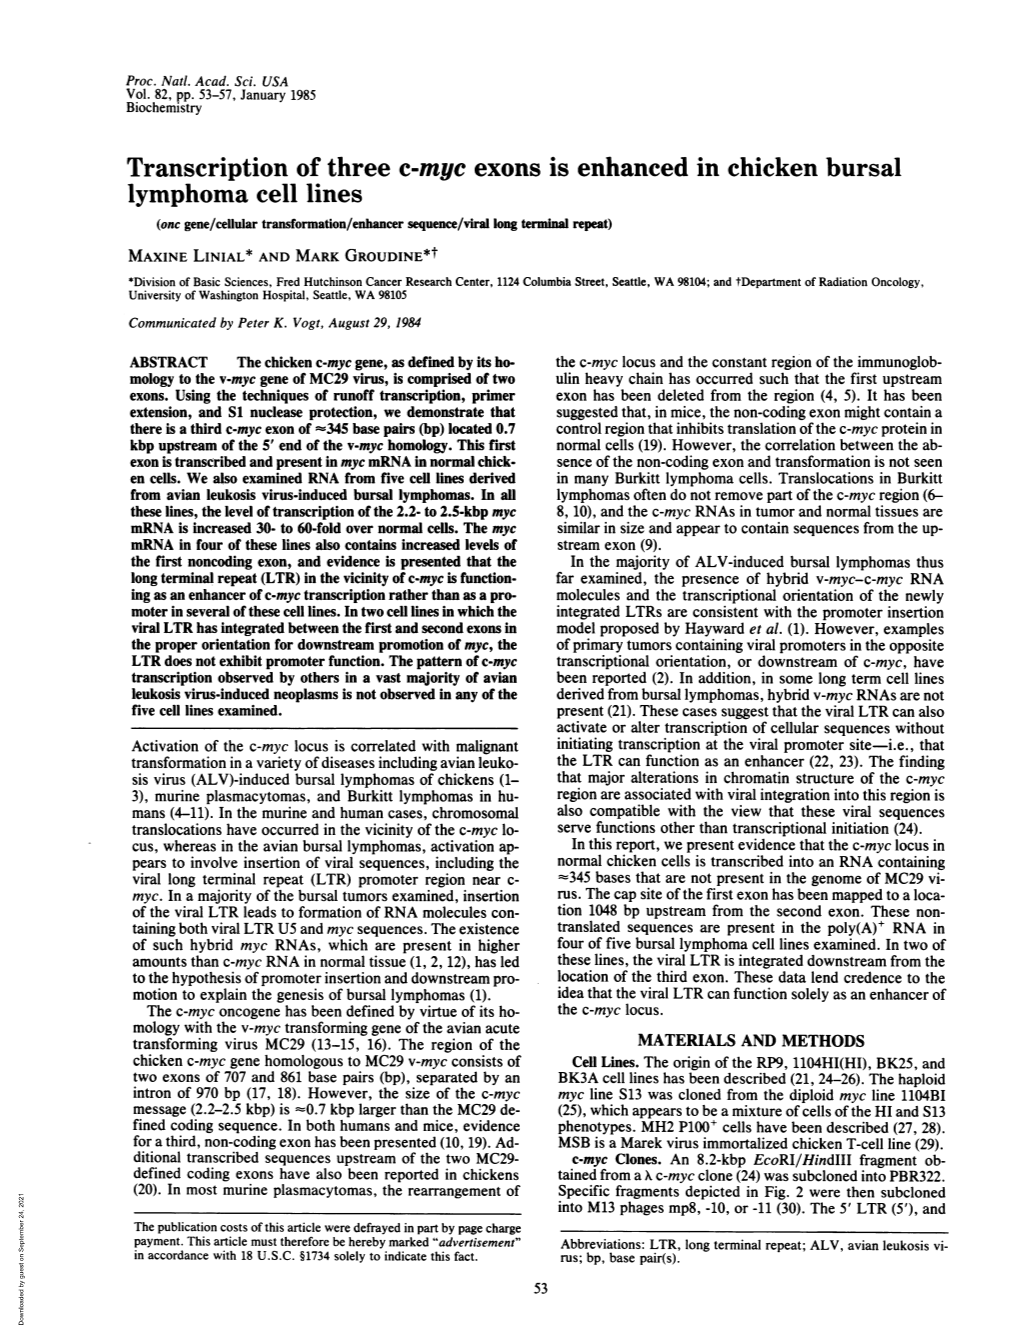 Transcription of Three C-Myc Exons Is Enhanced in Chicken Bursal